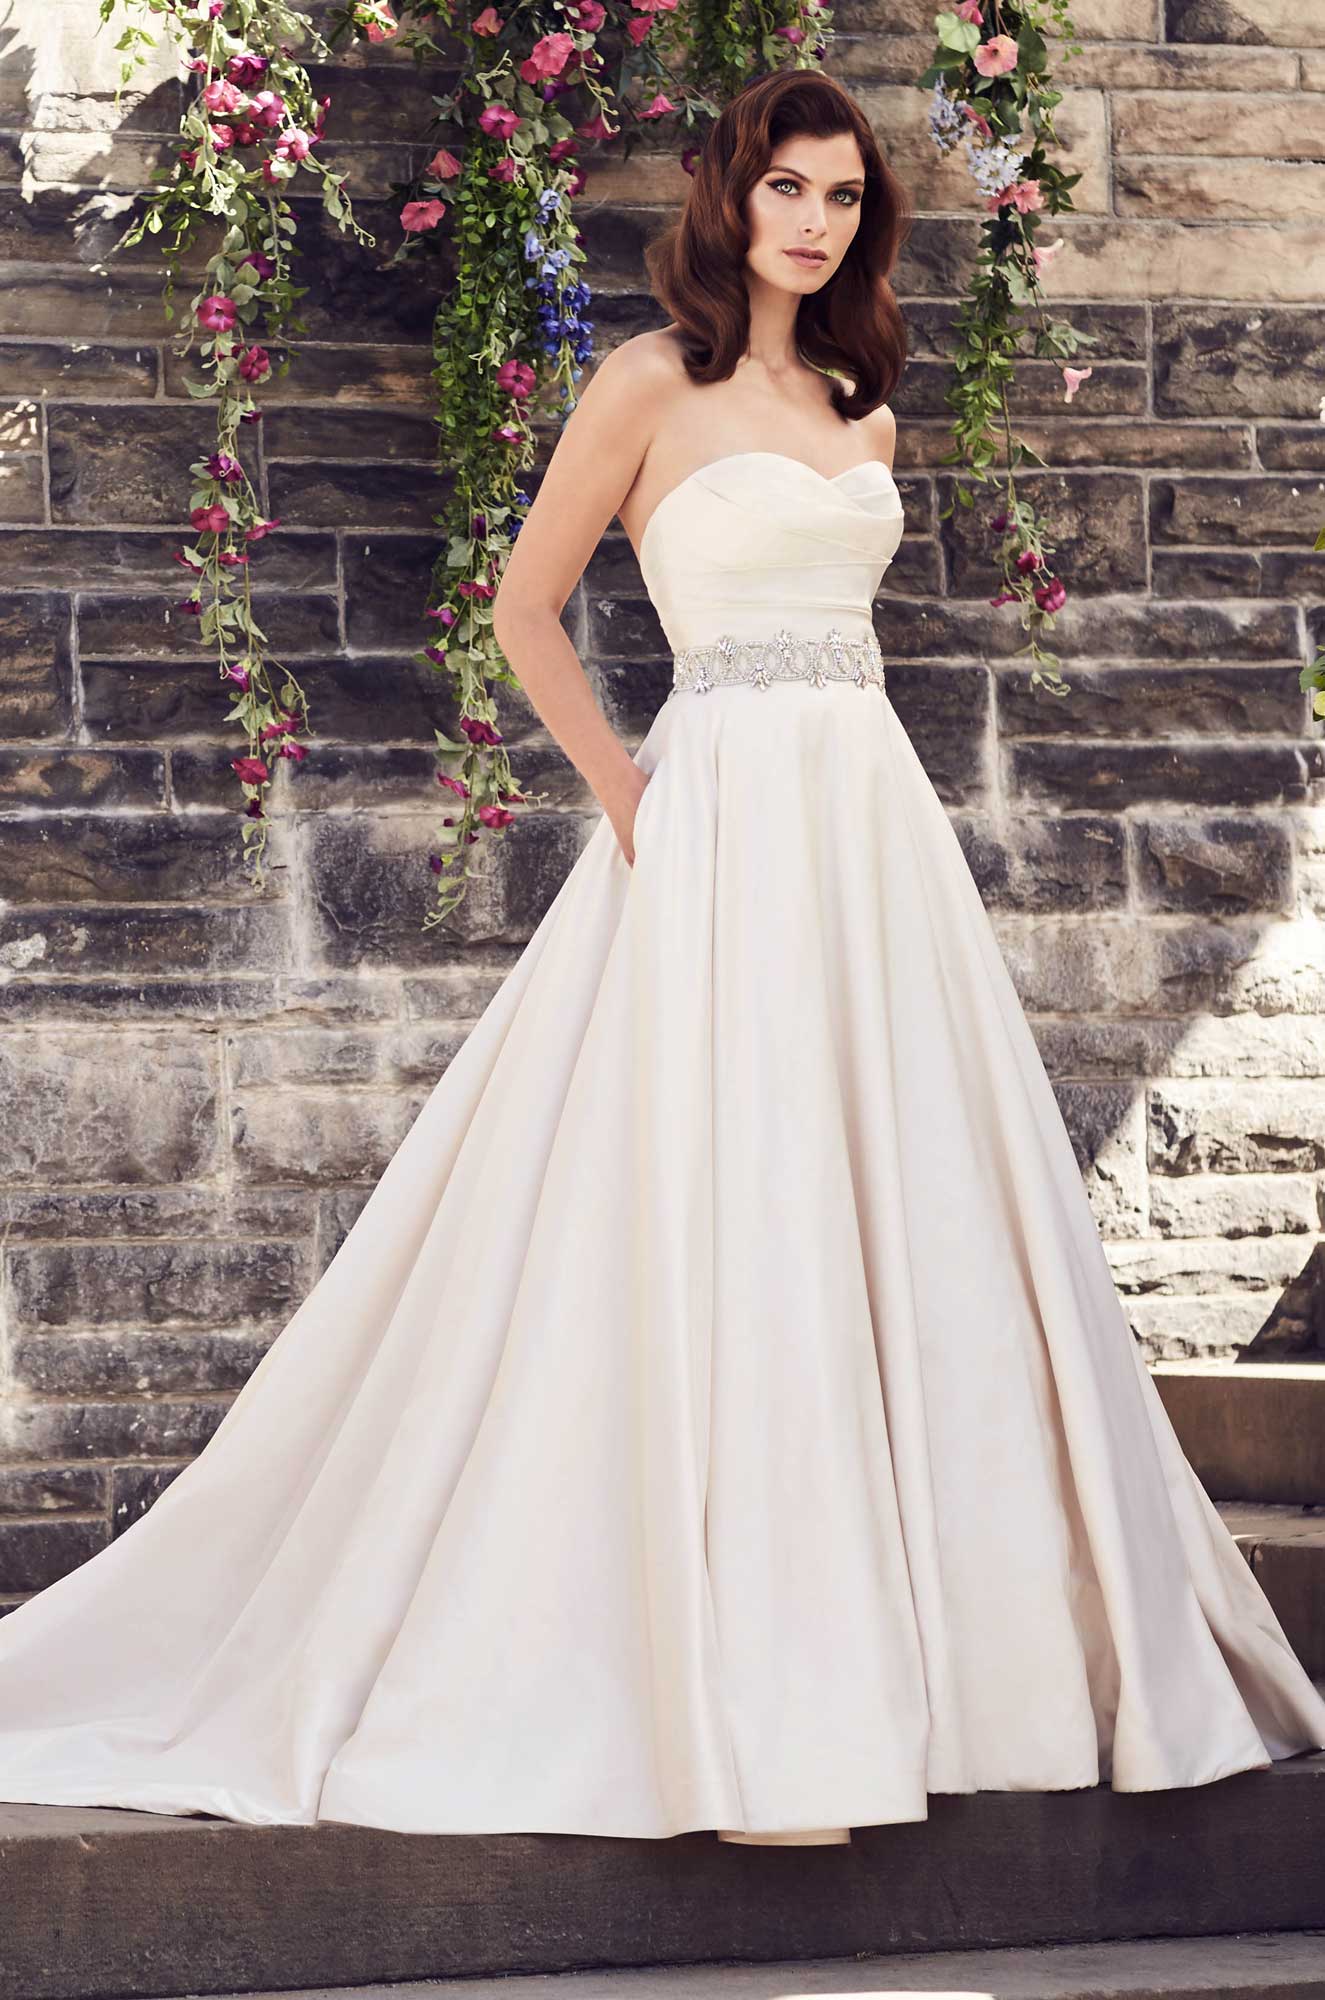 Model wearing a white dress 17